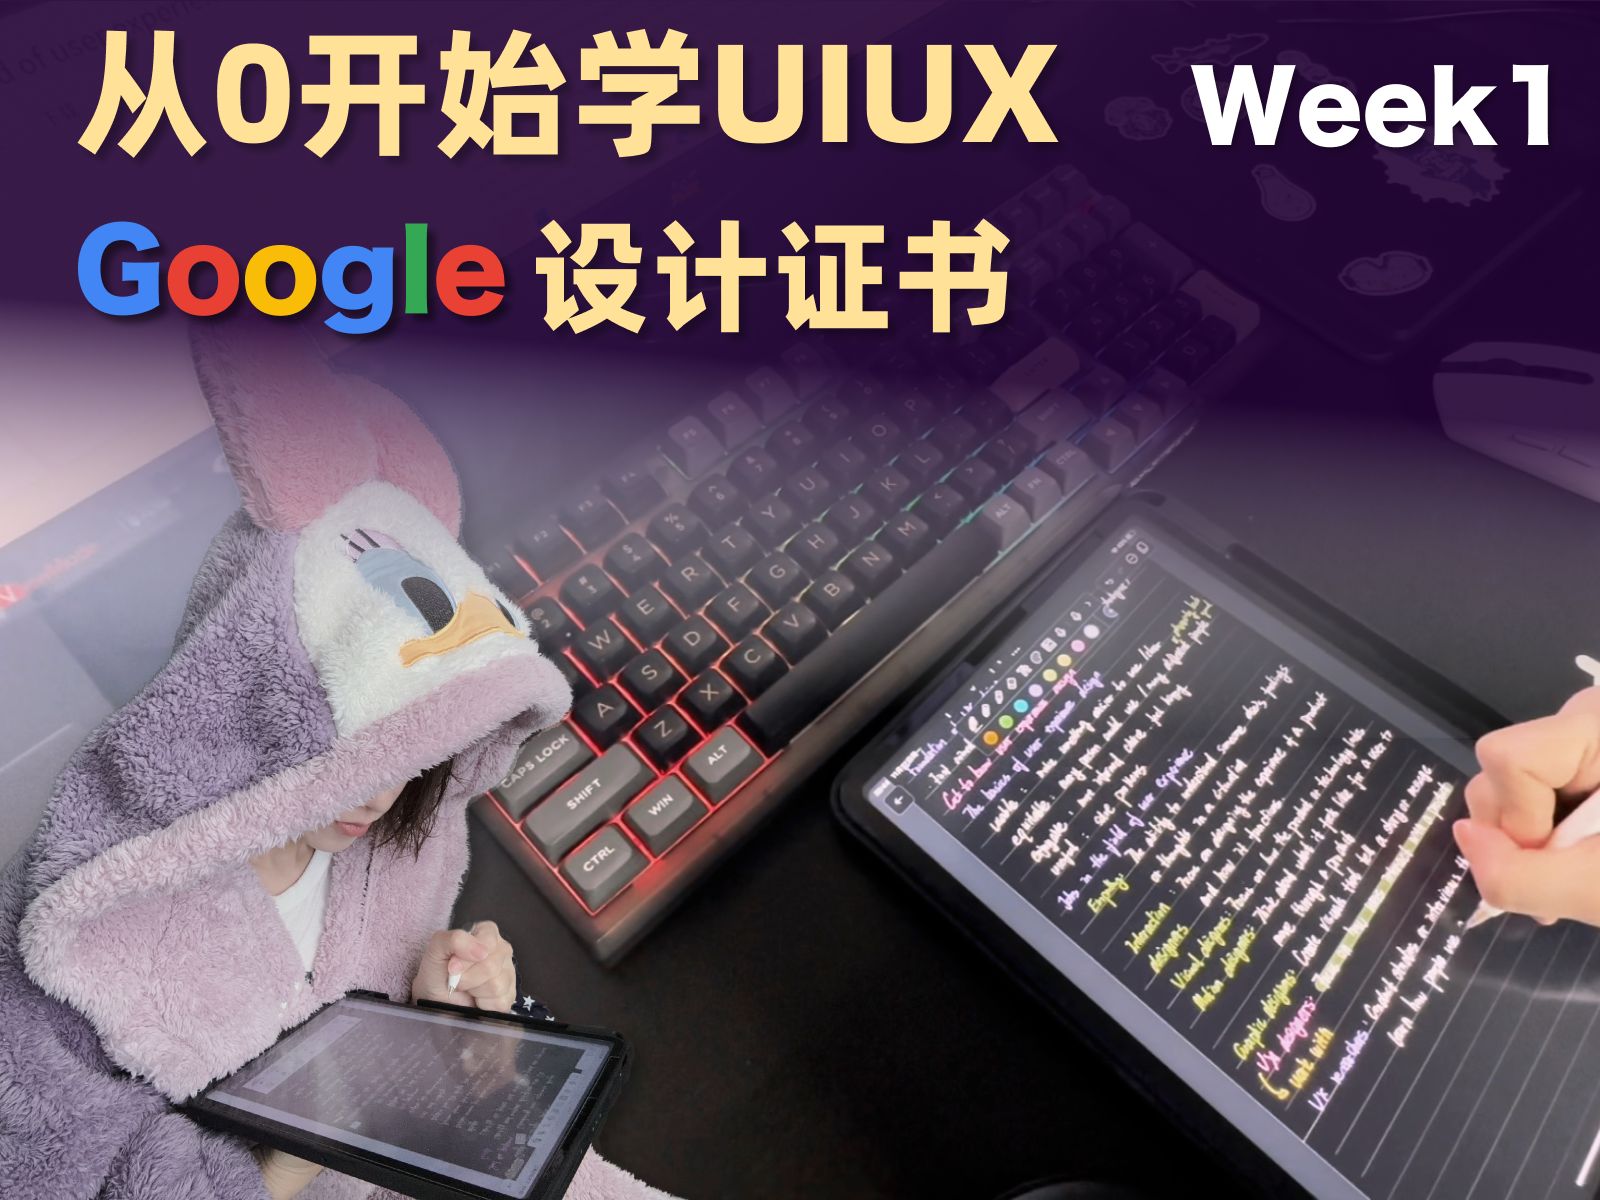 Week1 从0开始学UIUX课程知识分享 半年内考下谷歌证书